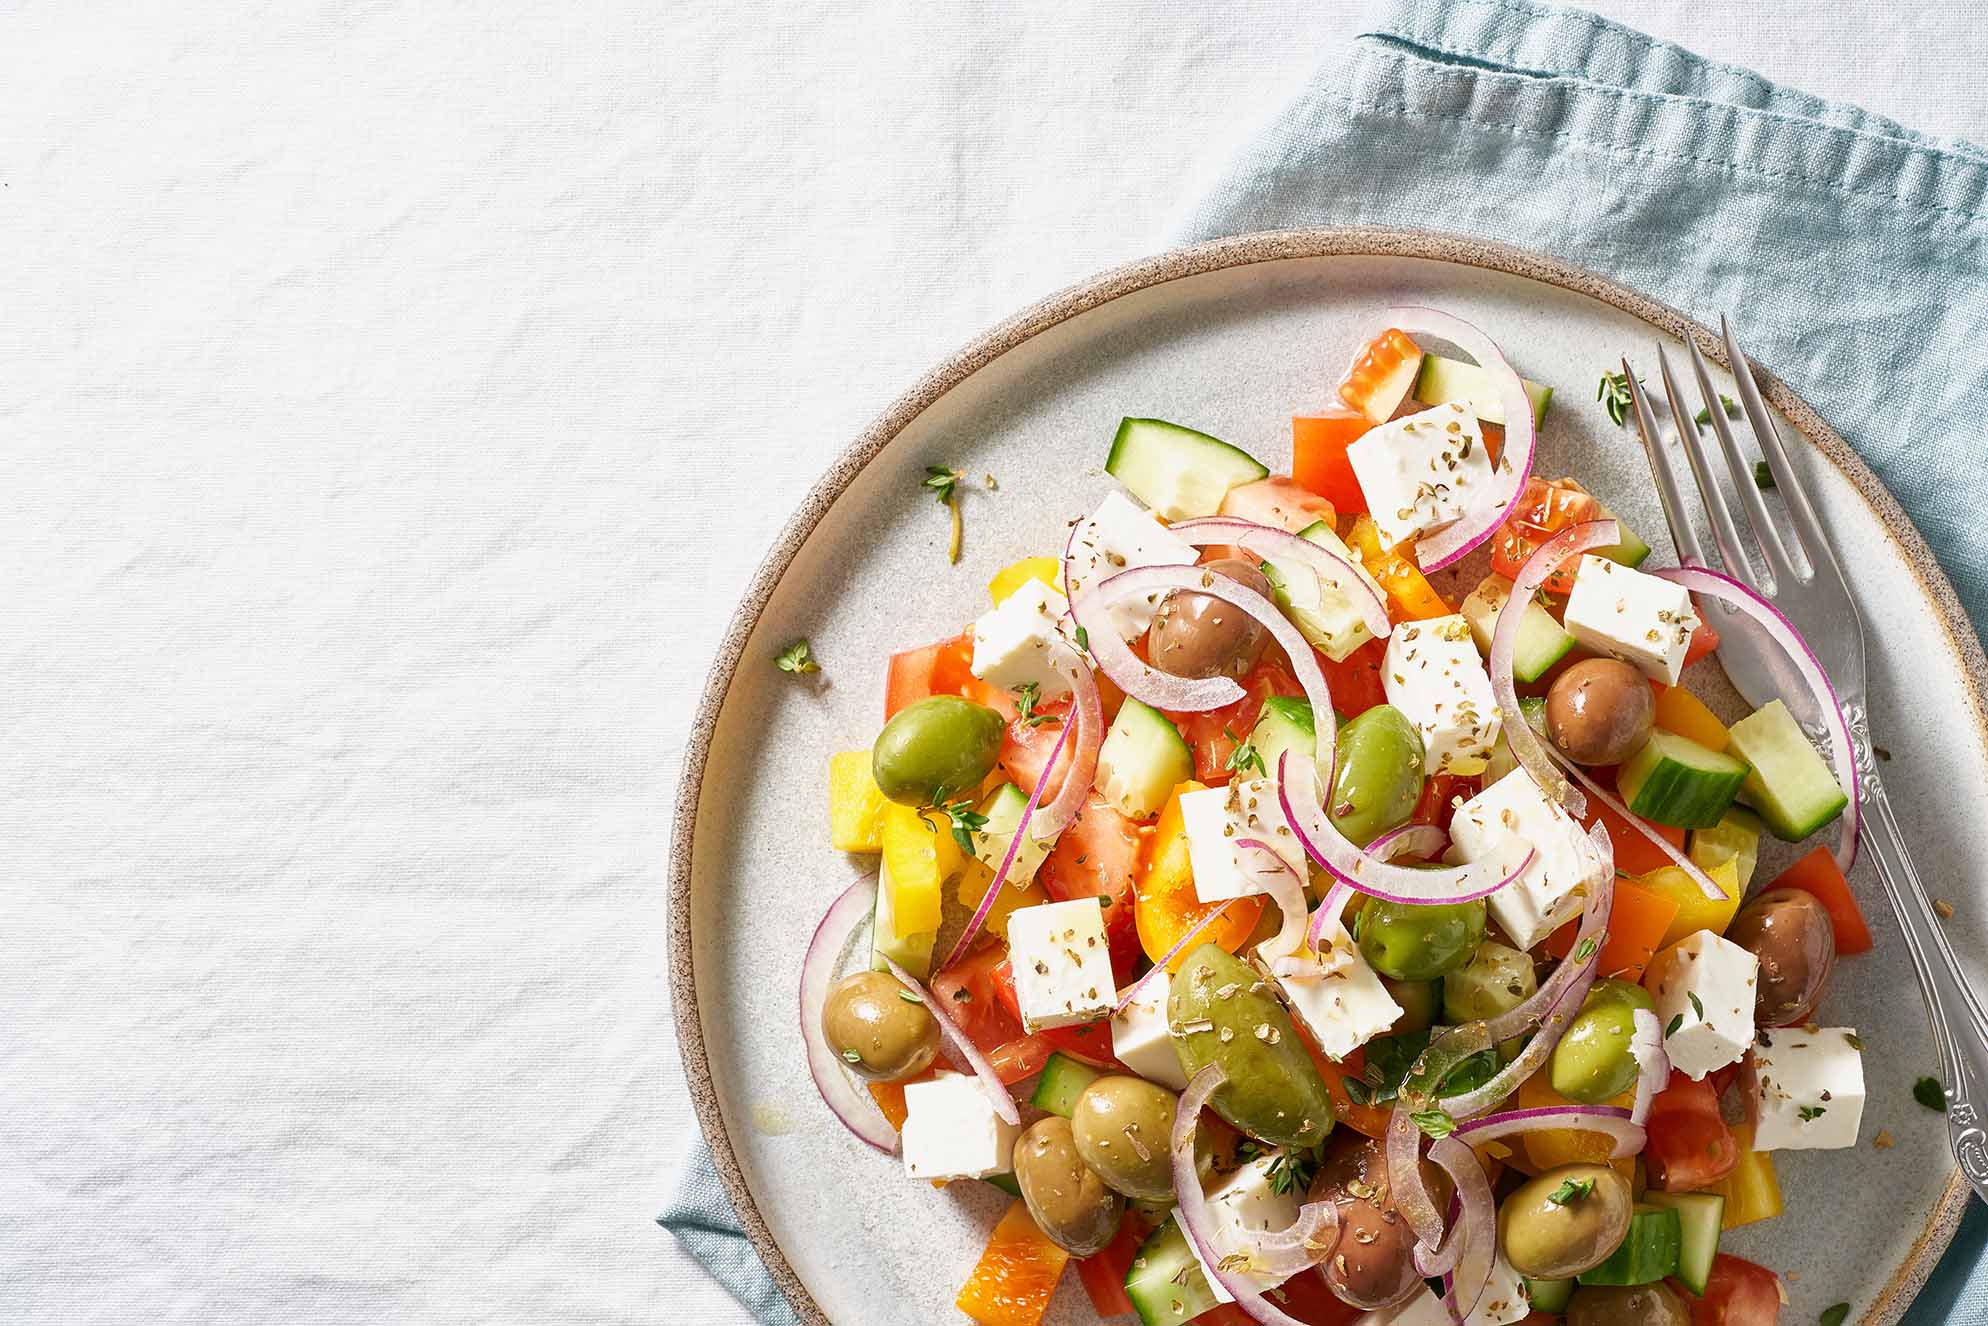 Salade grecque - Greek salad